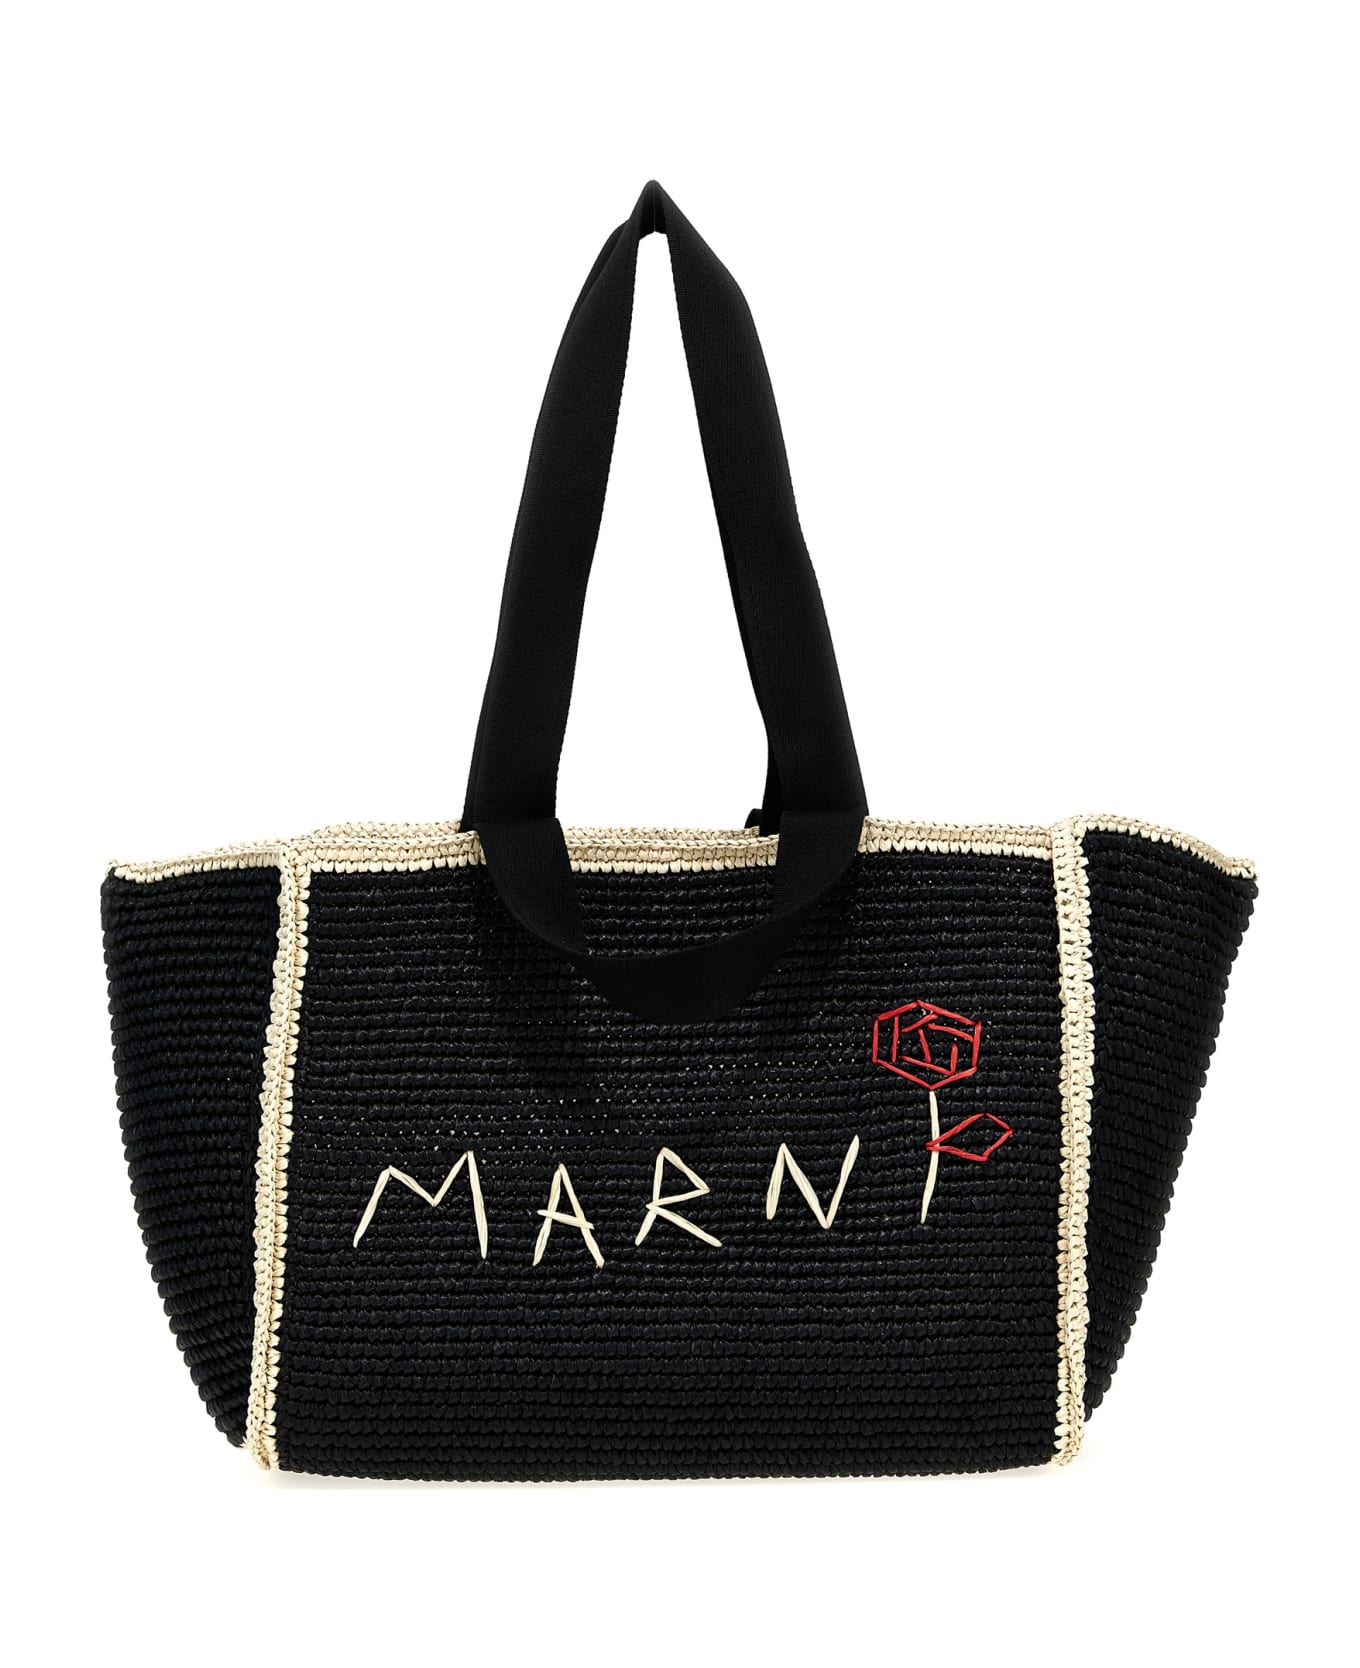 Marni Macramé Shopping Bag - White/Black